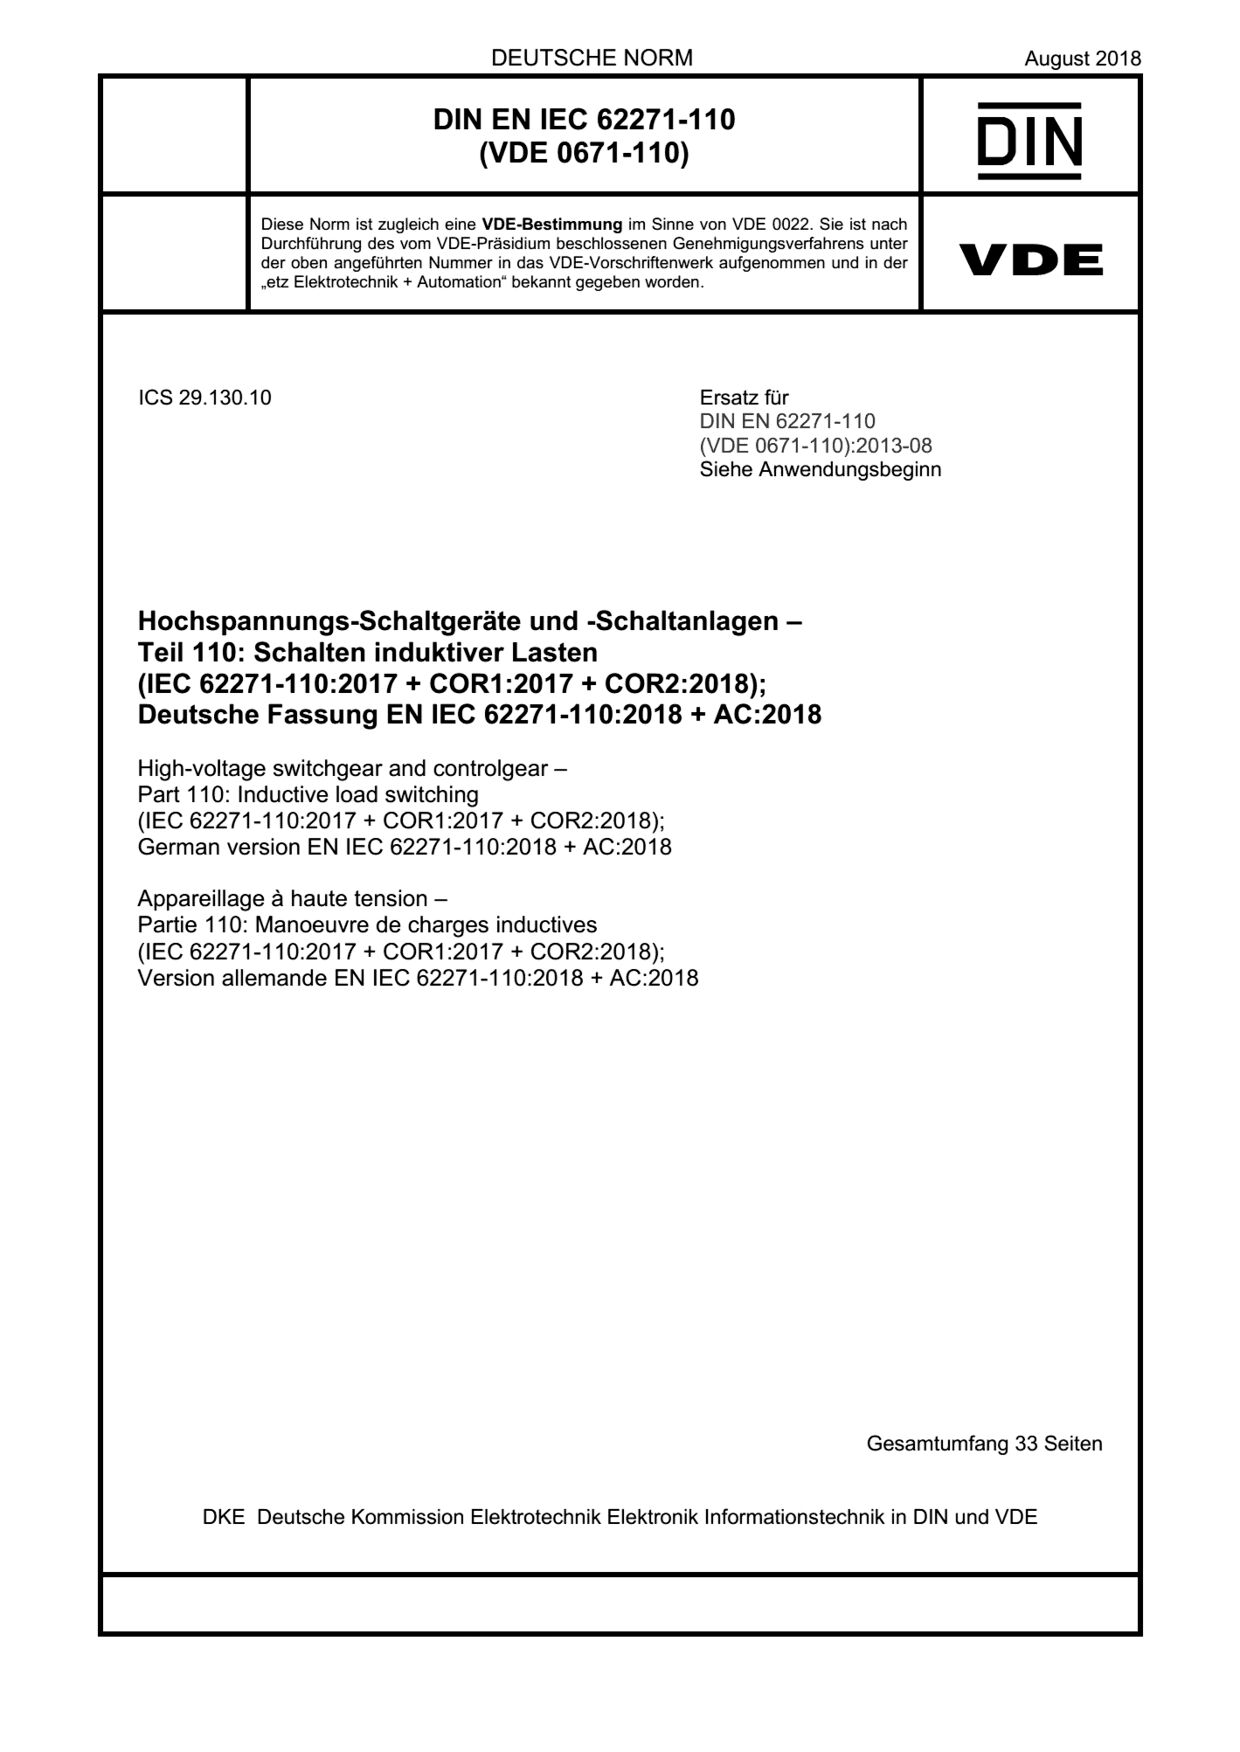 DIN EN IEC 62271-110:2018封面图